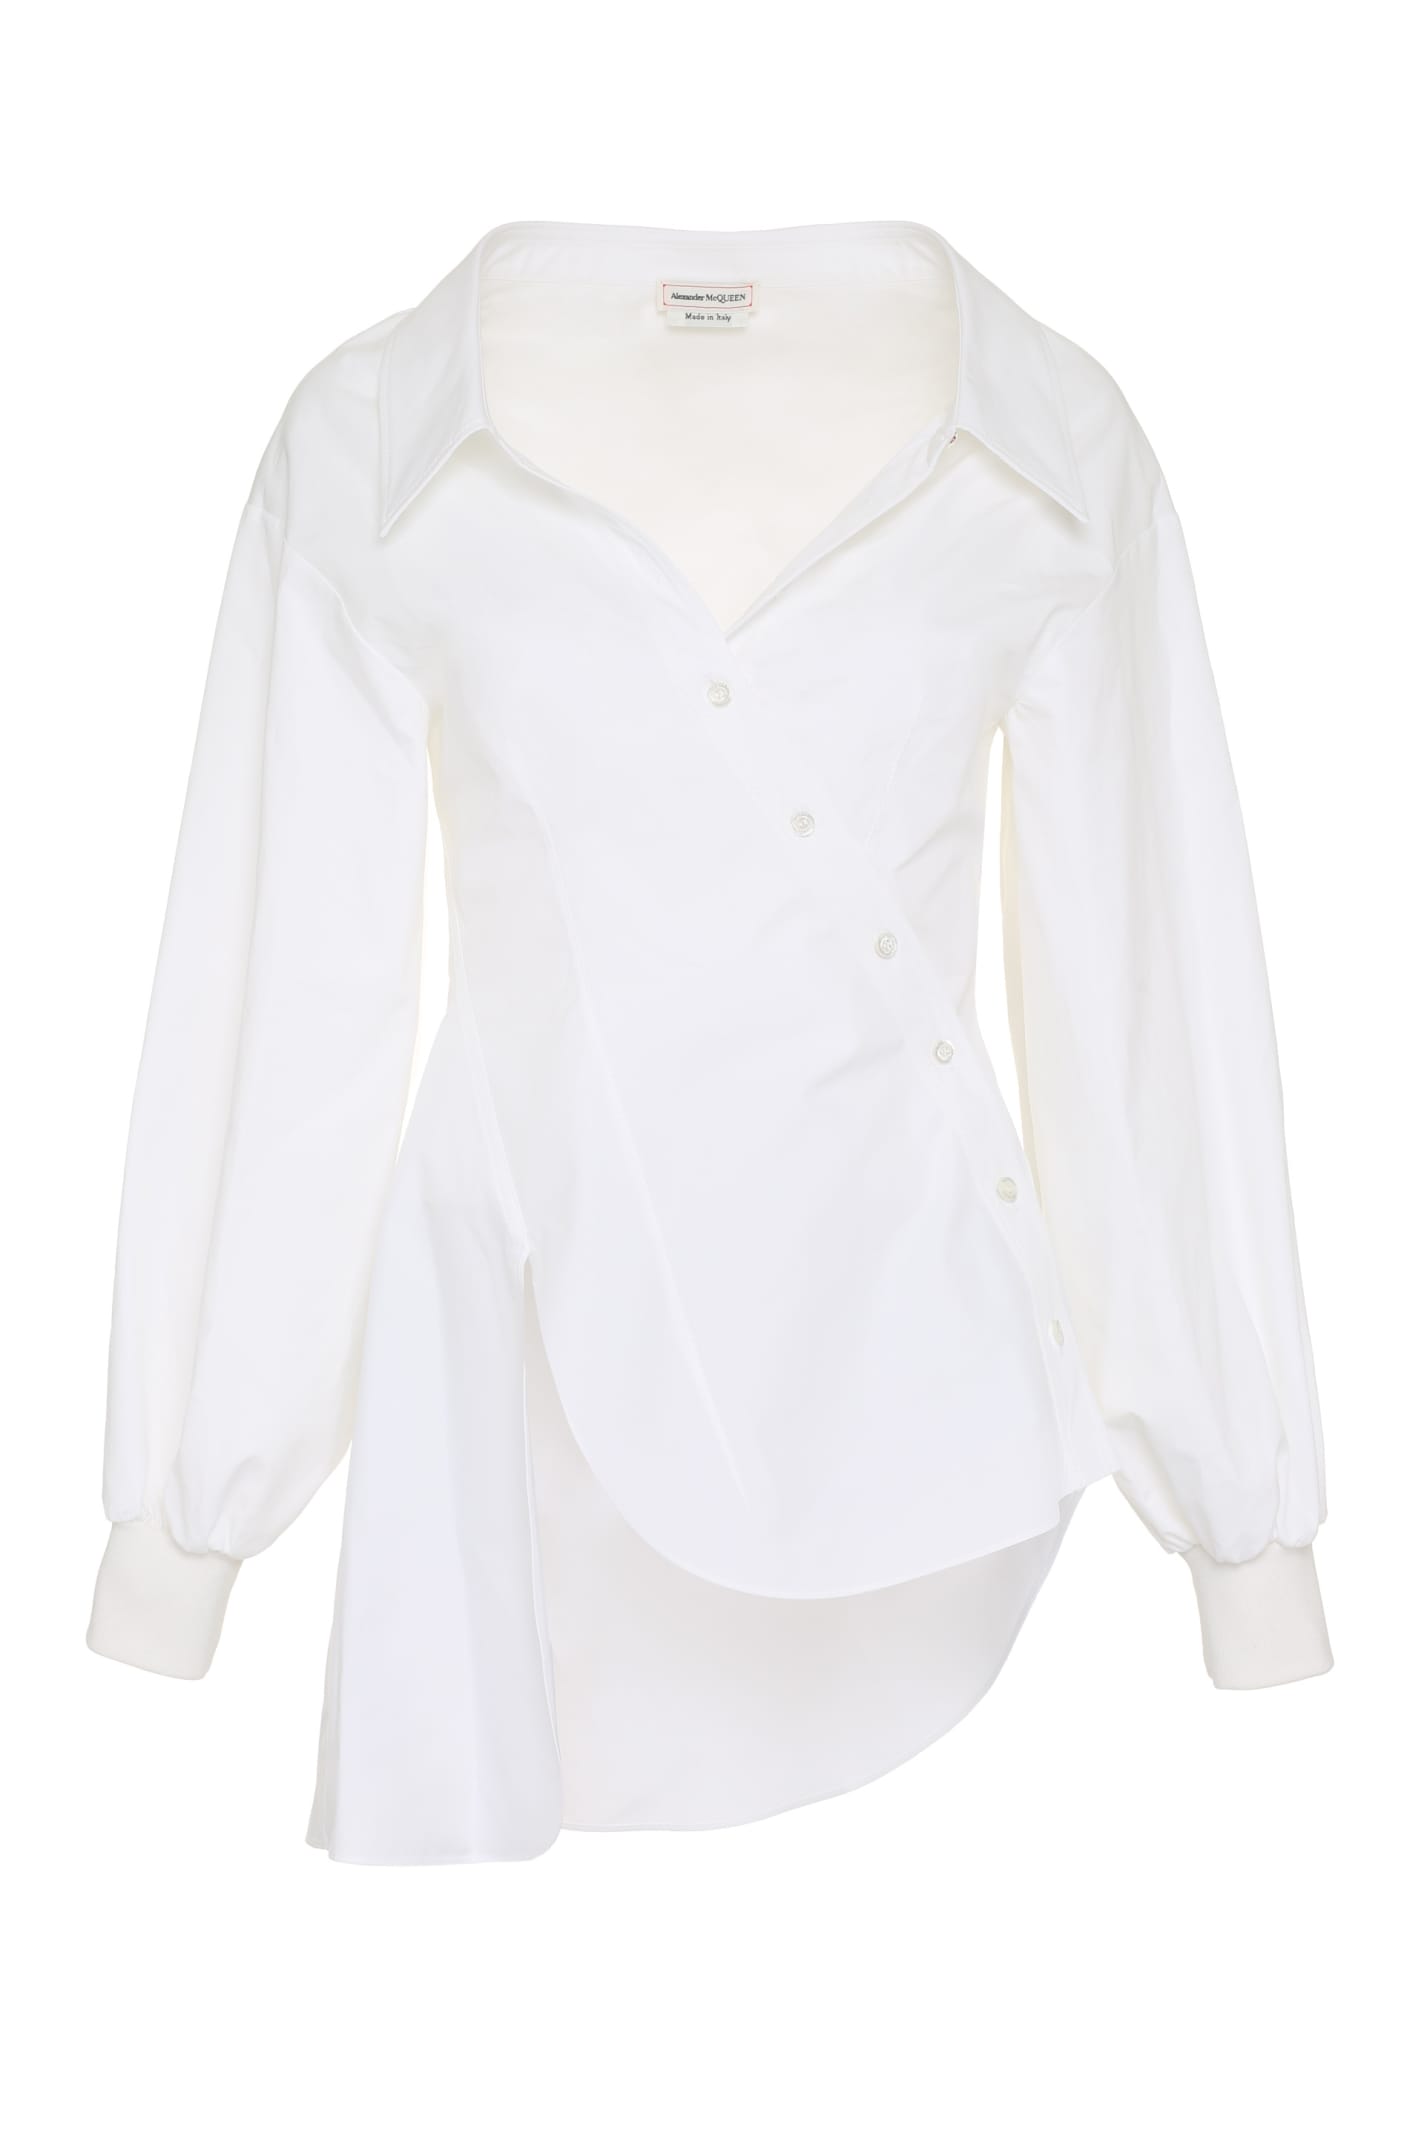 Alexander McQueen Asymmetric Cotton Shirt